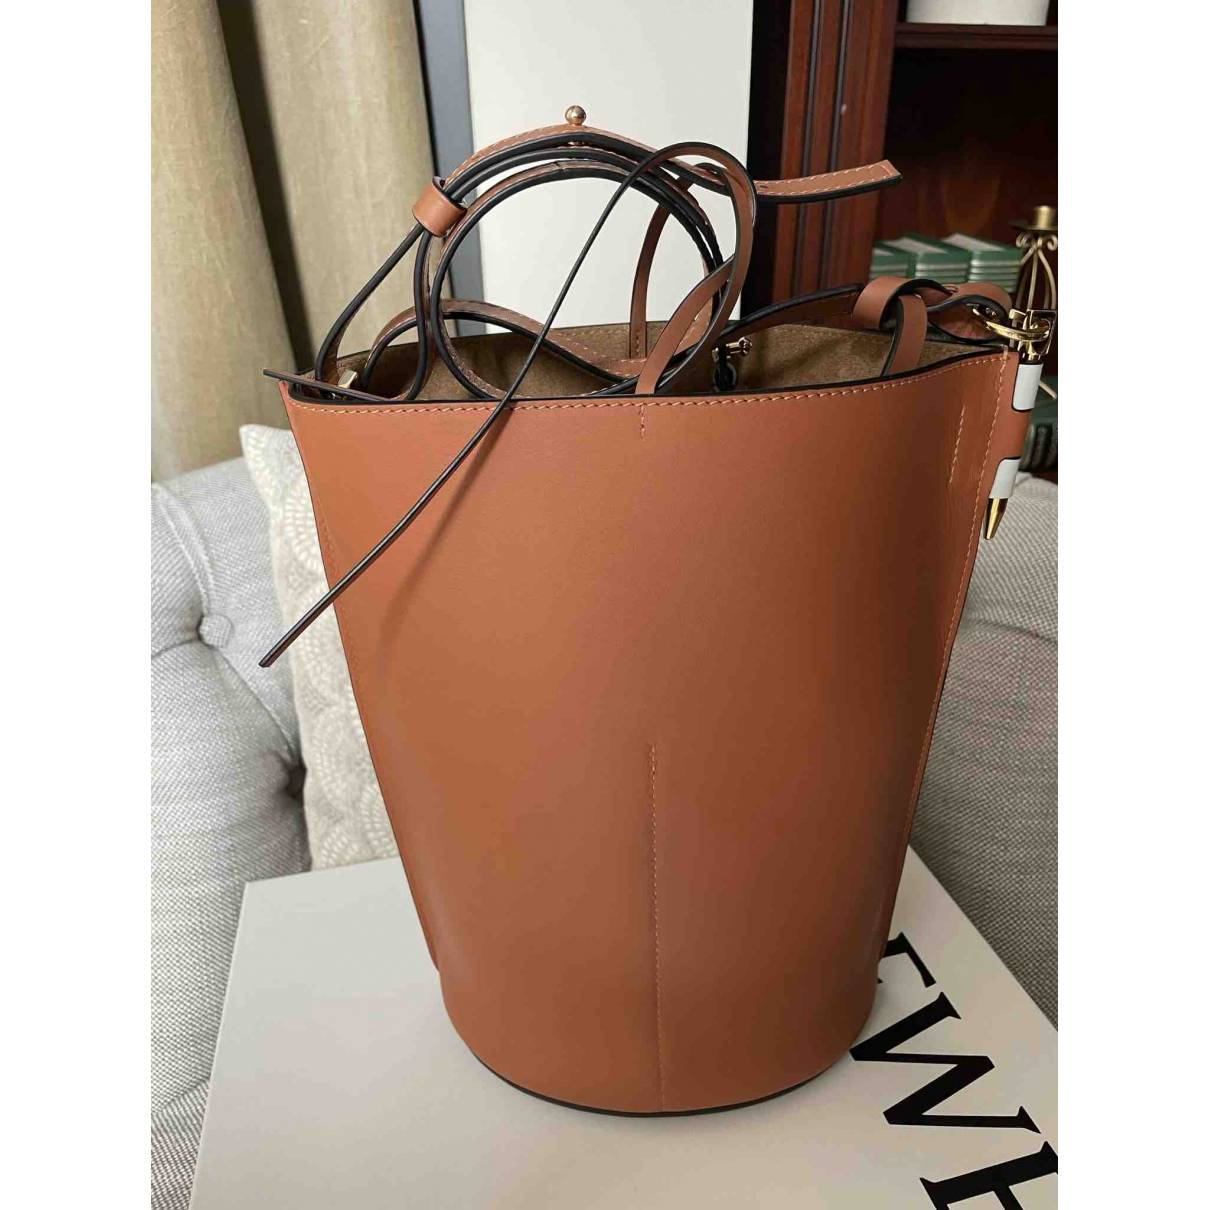 loewe gate bucket handle bag